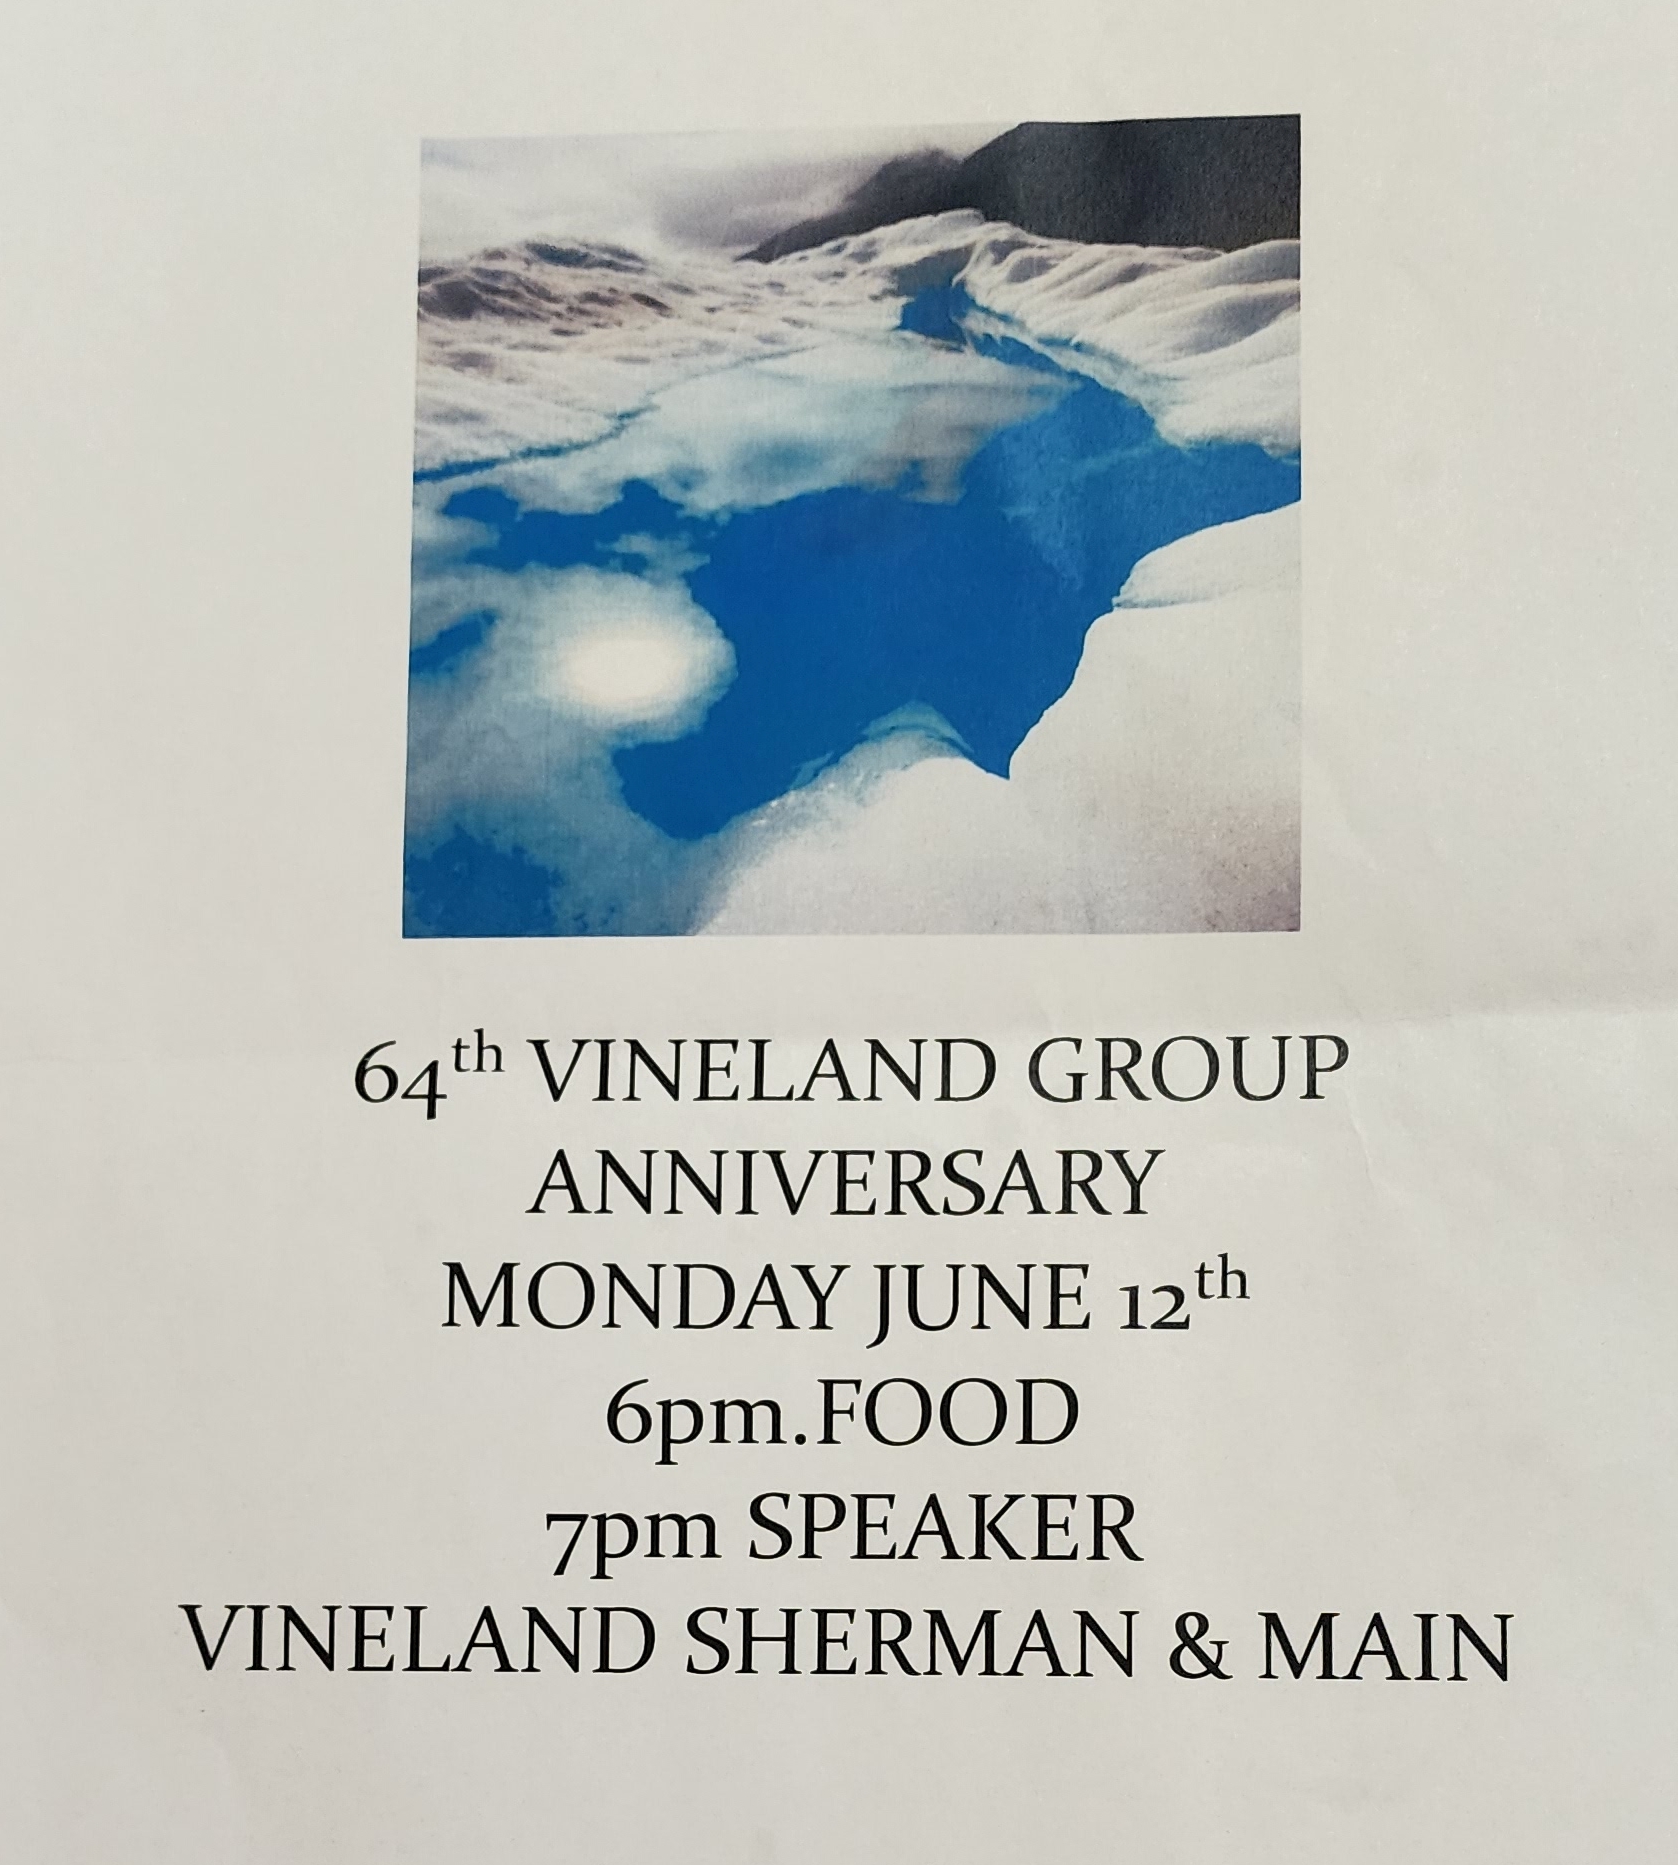 Vineland Group 64th Anniversary flyer